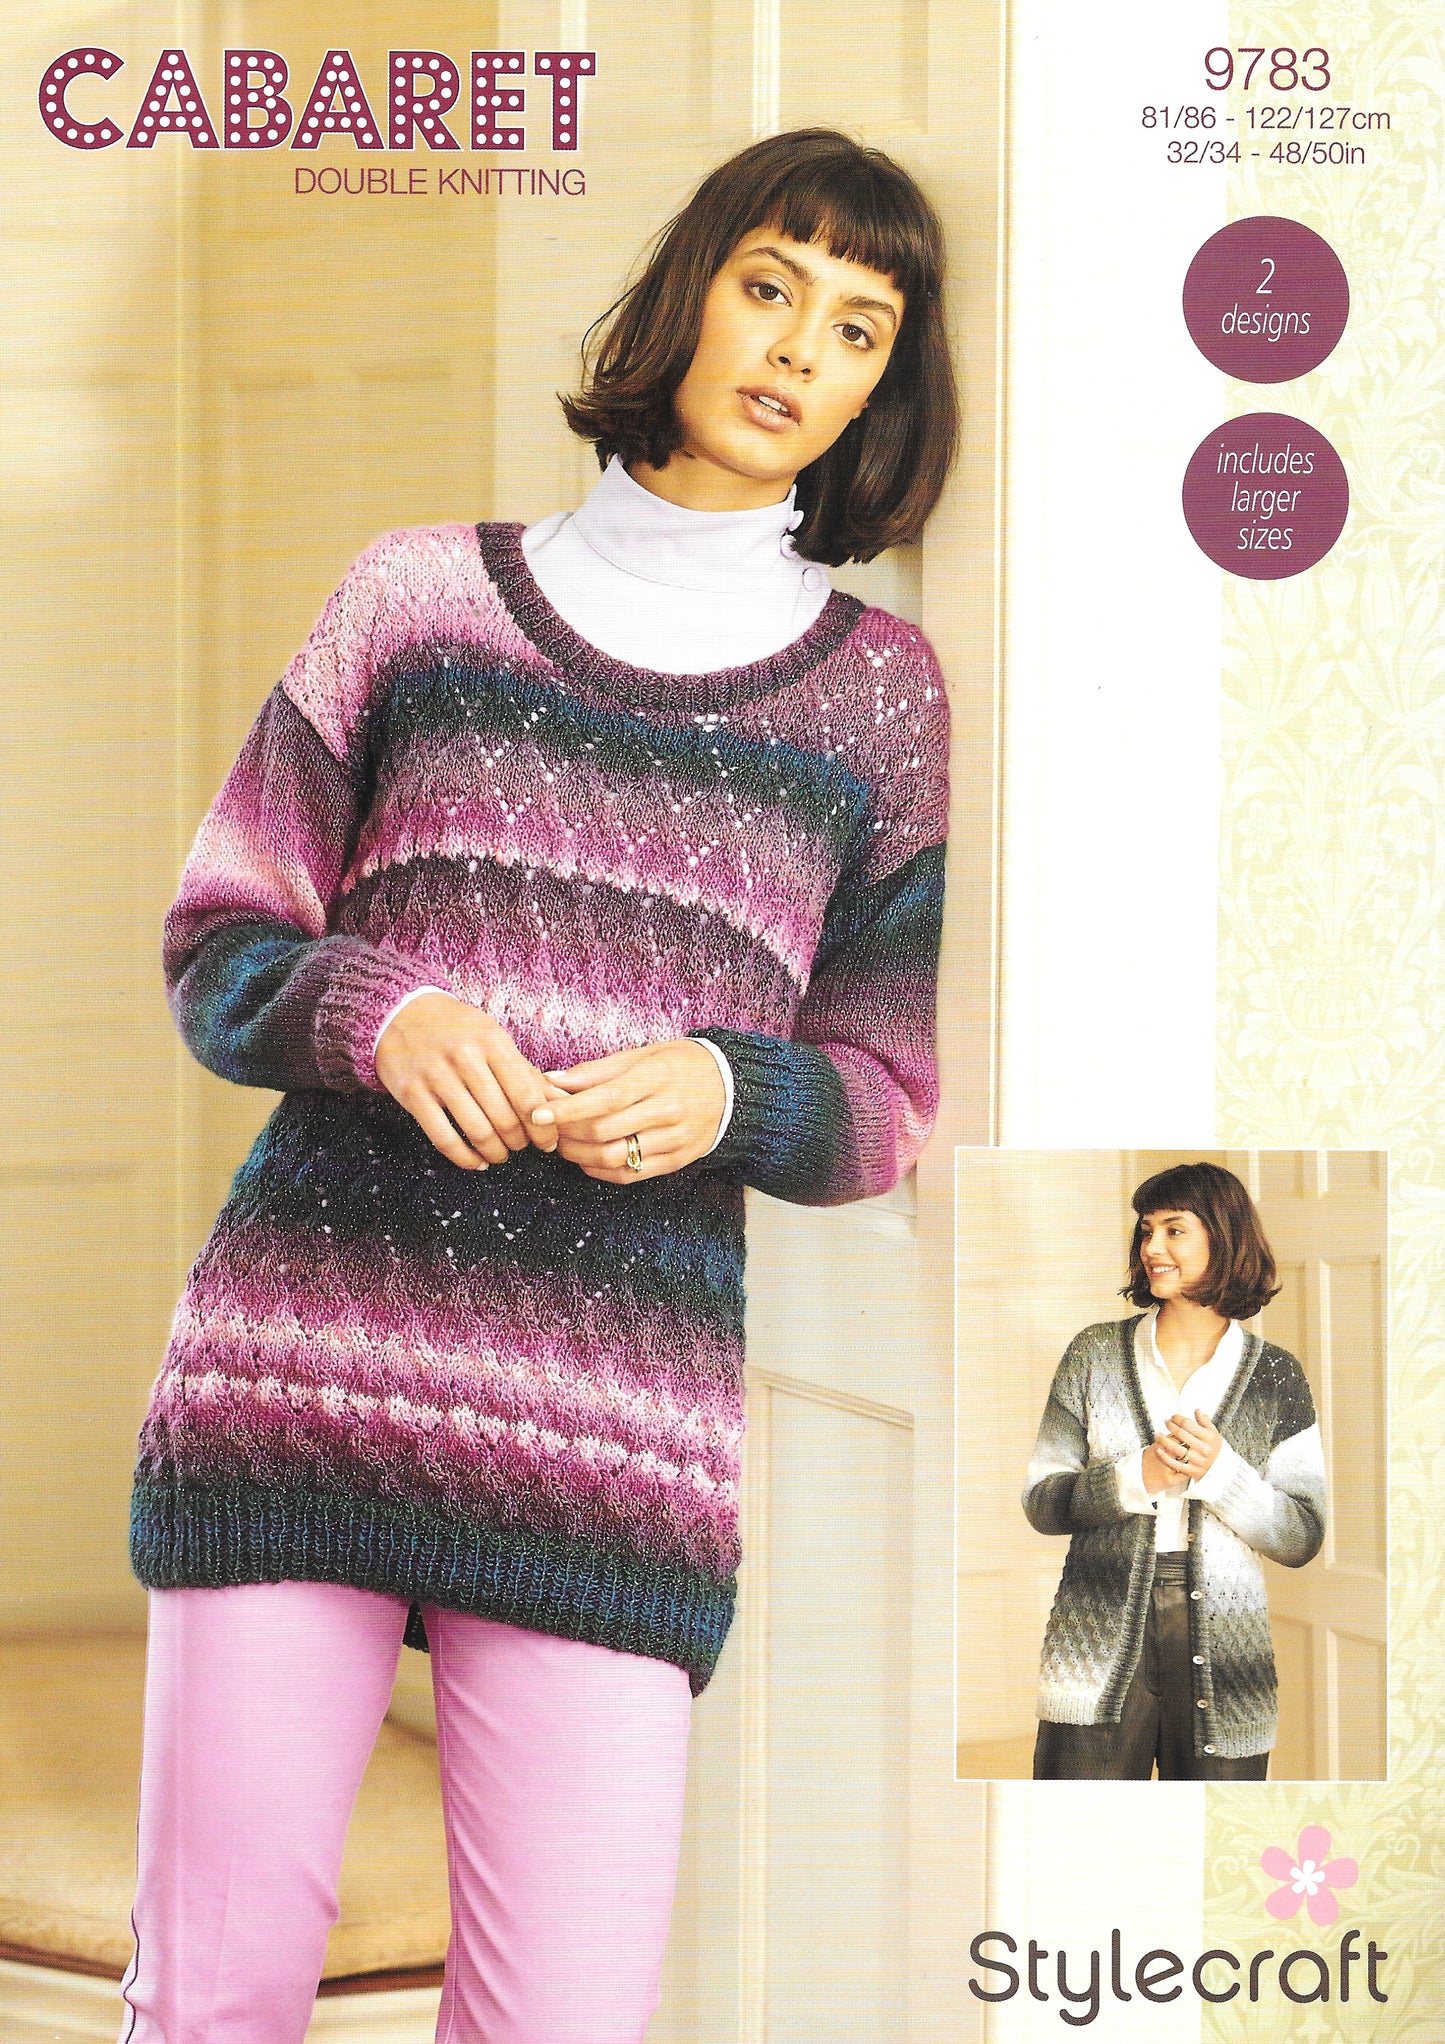 9783 Stylecraft Cabaret dk ladies cardigan/jumper knitting pattern